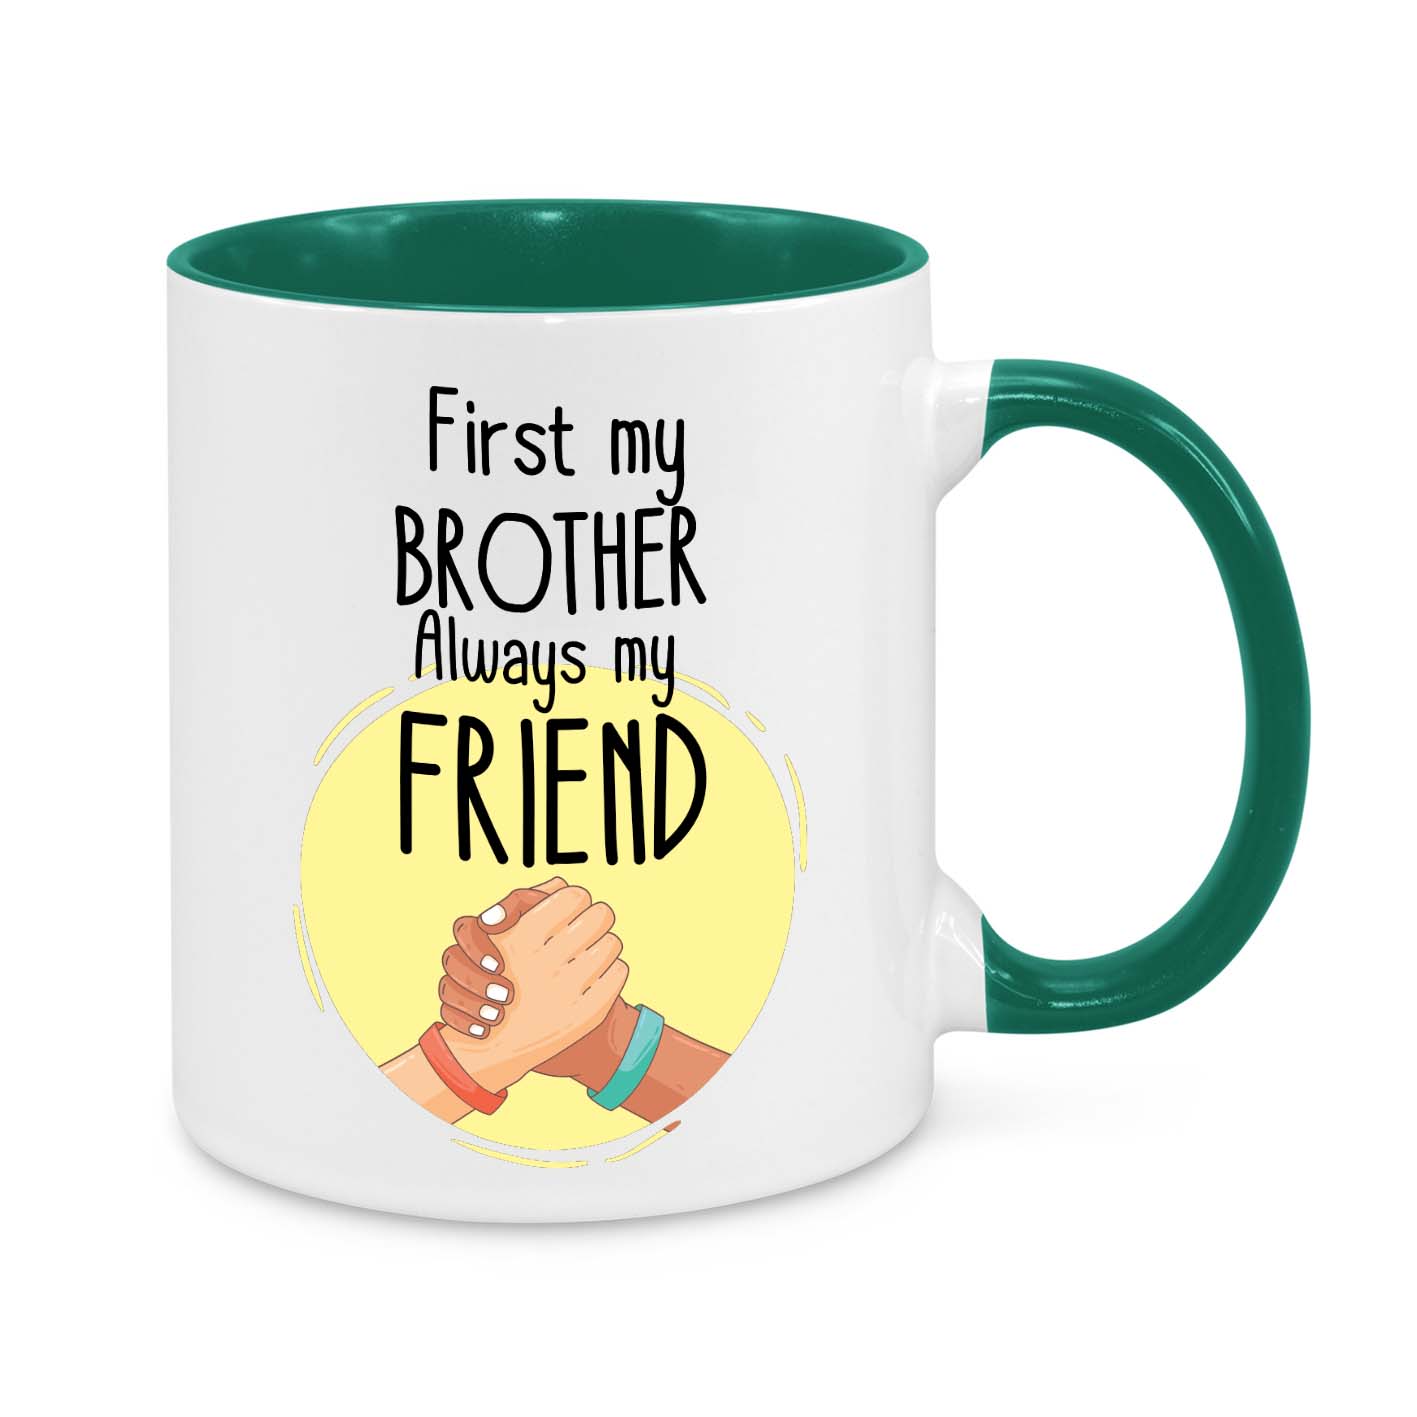 First My Brother, Always My Friend Novelty Mug